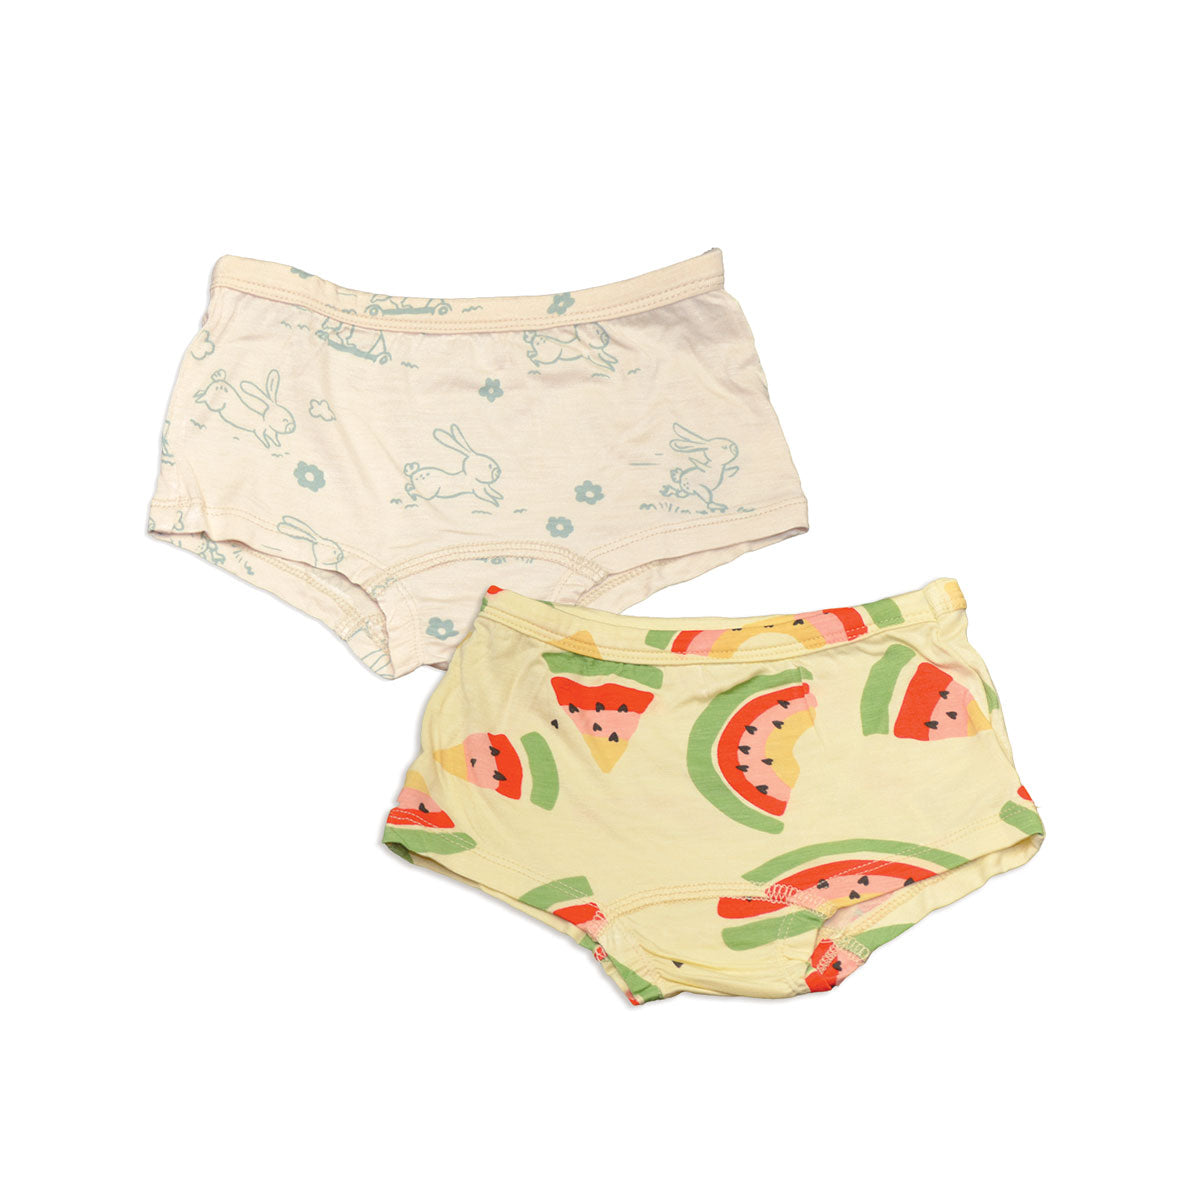 Bamboo Boyshorts Underwear 2 pack (Watermelon Rainbow/Go Go Bunny Prin 